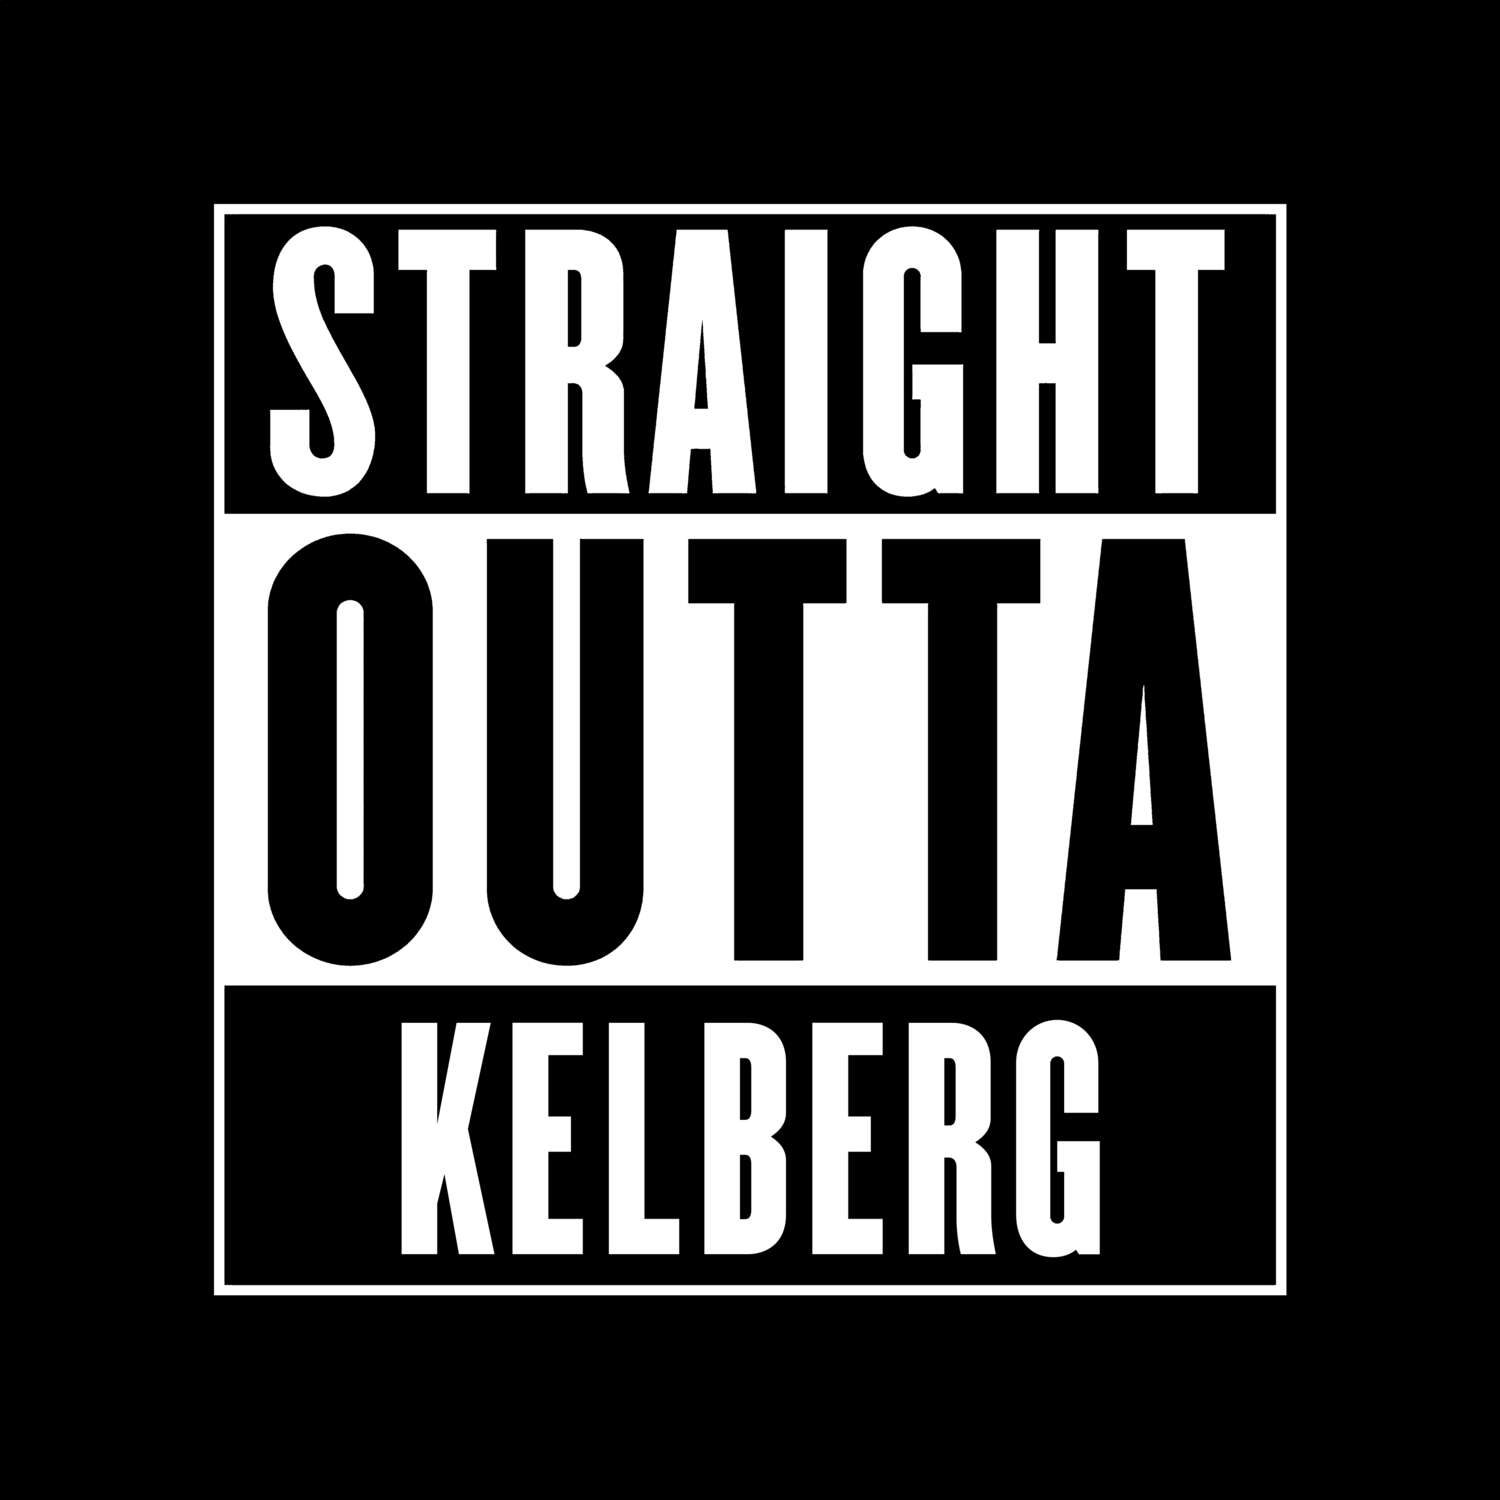 Kelberg T-Shirt »Straight Outta«